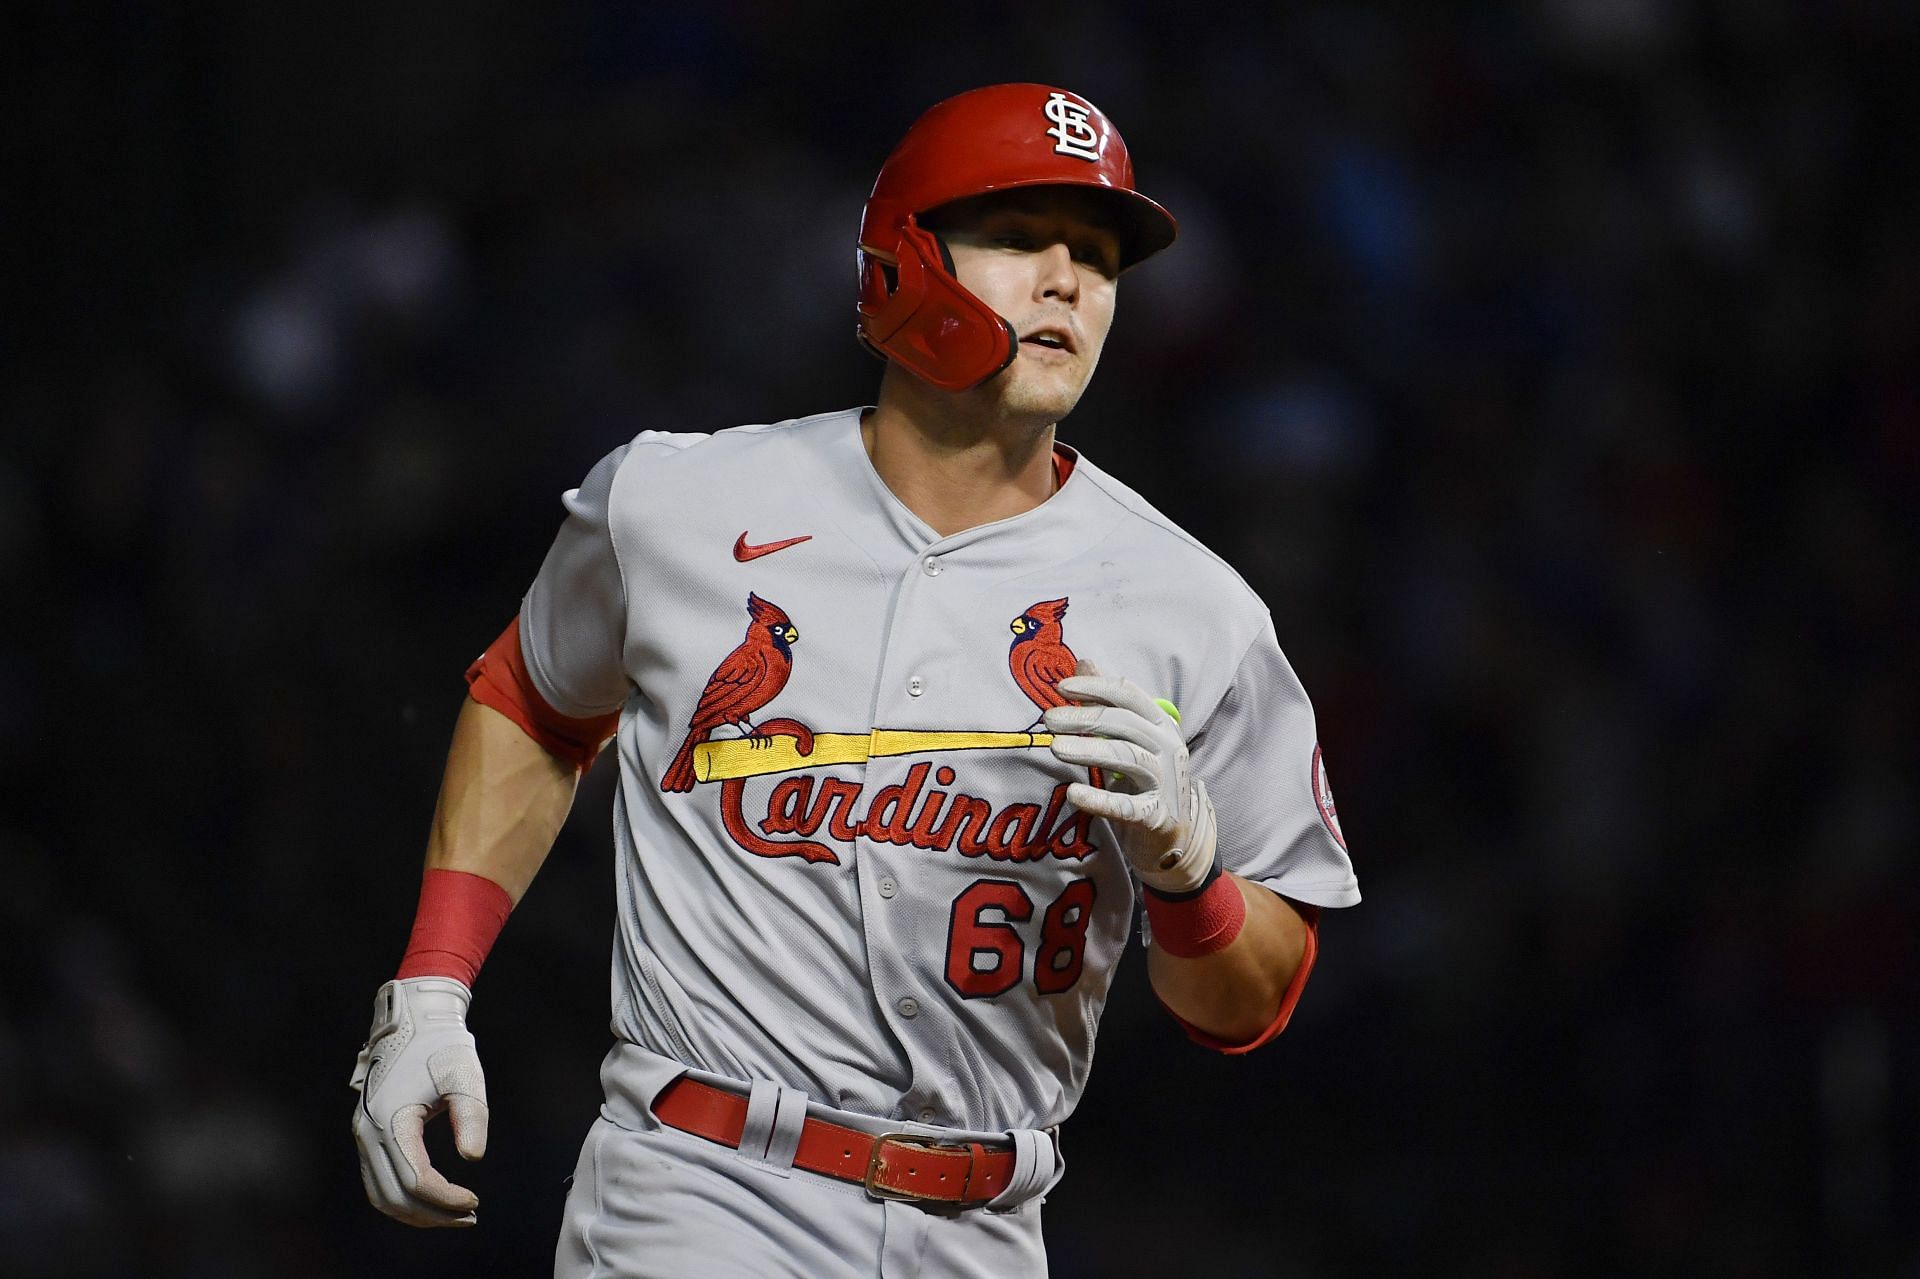 Baseball Twitter reacts to St. Louis Cardinals slugger Lars